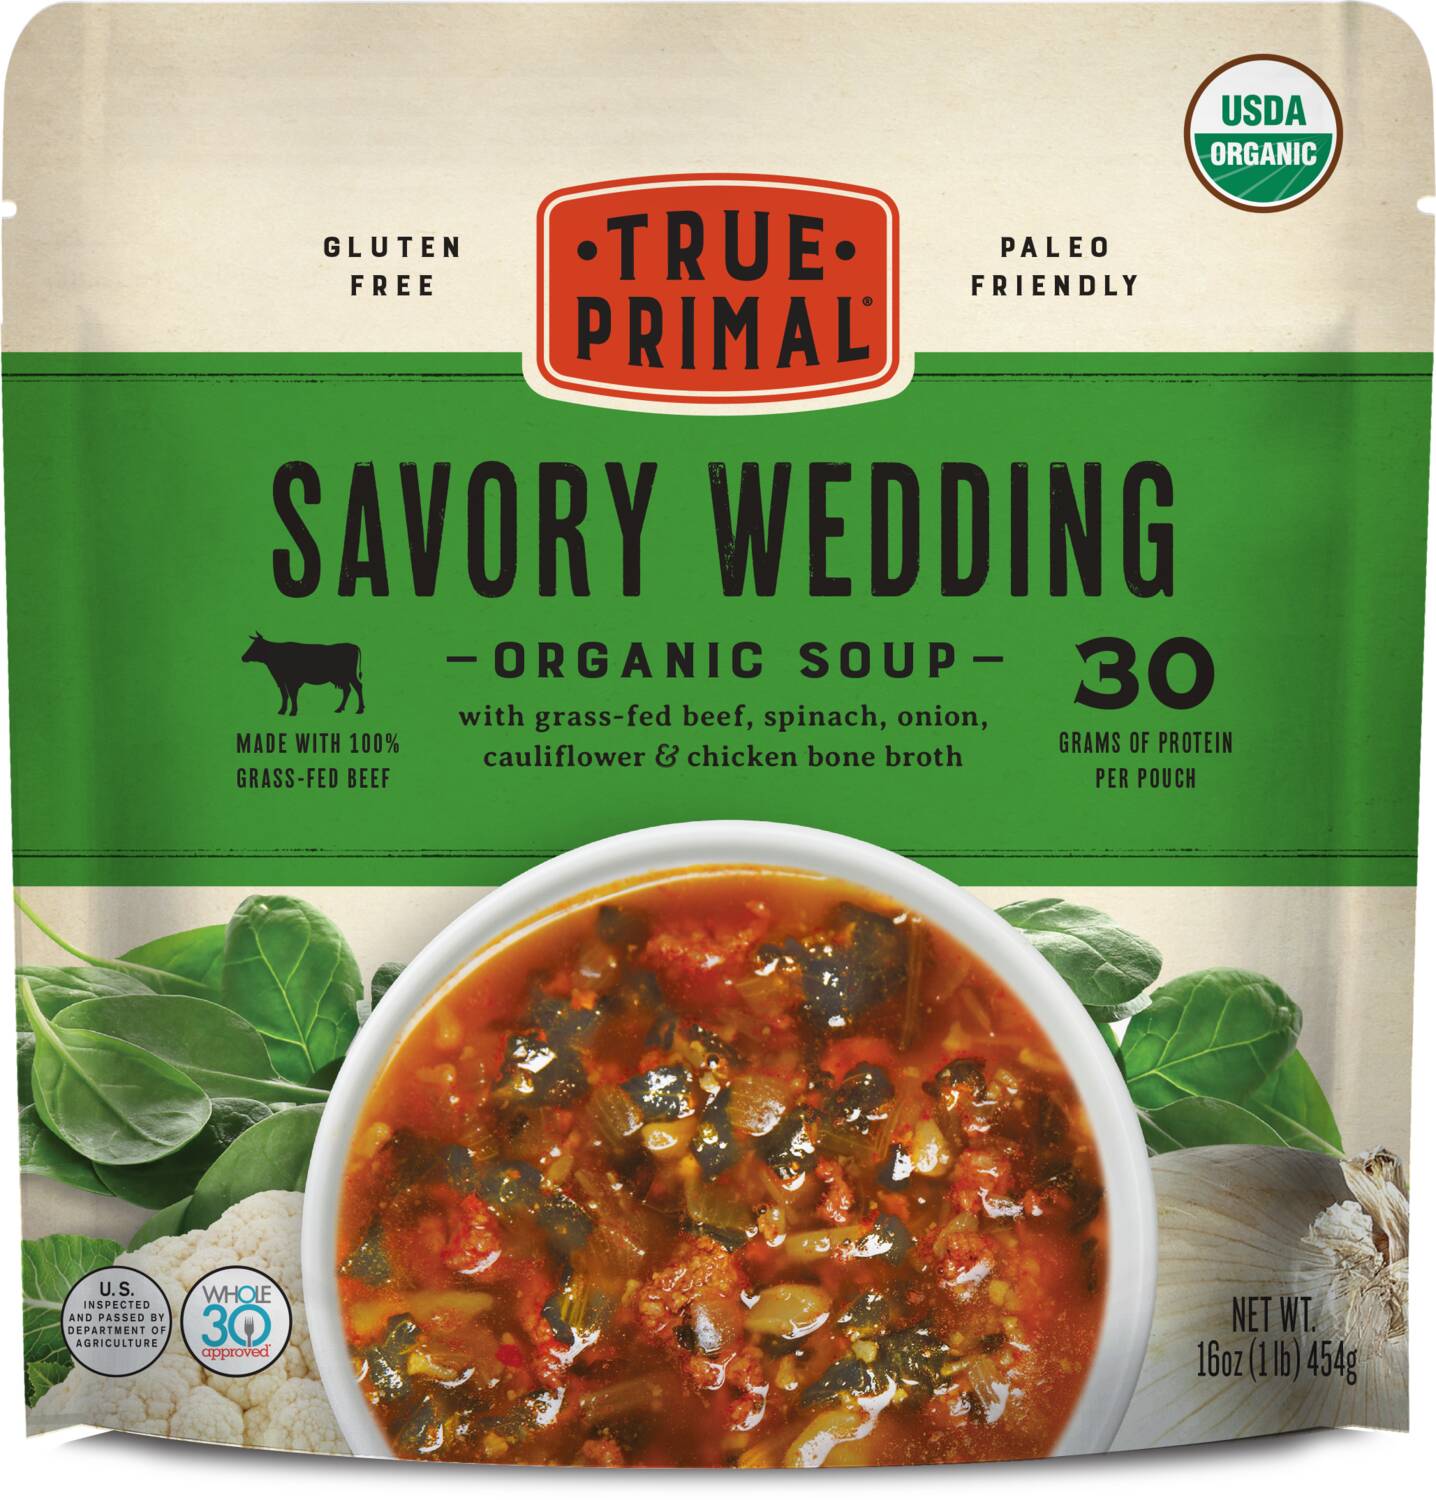 https://trueprimal.com/img/savory-wedding-organic-soup-front-white.jpg